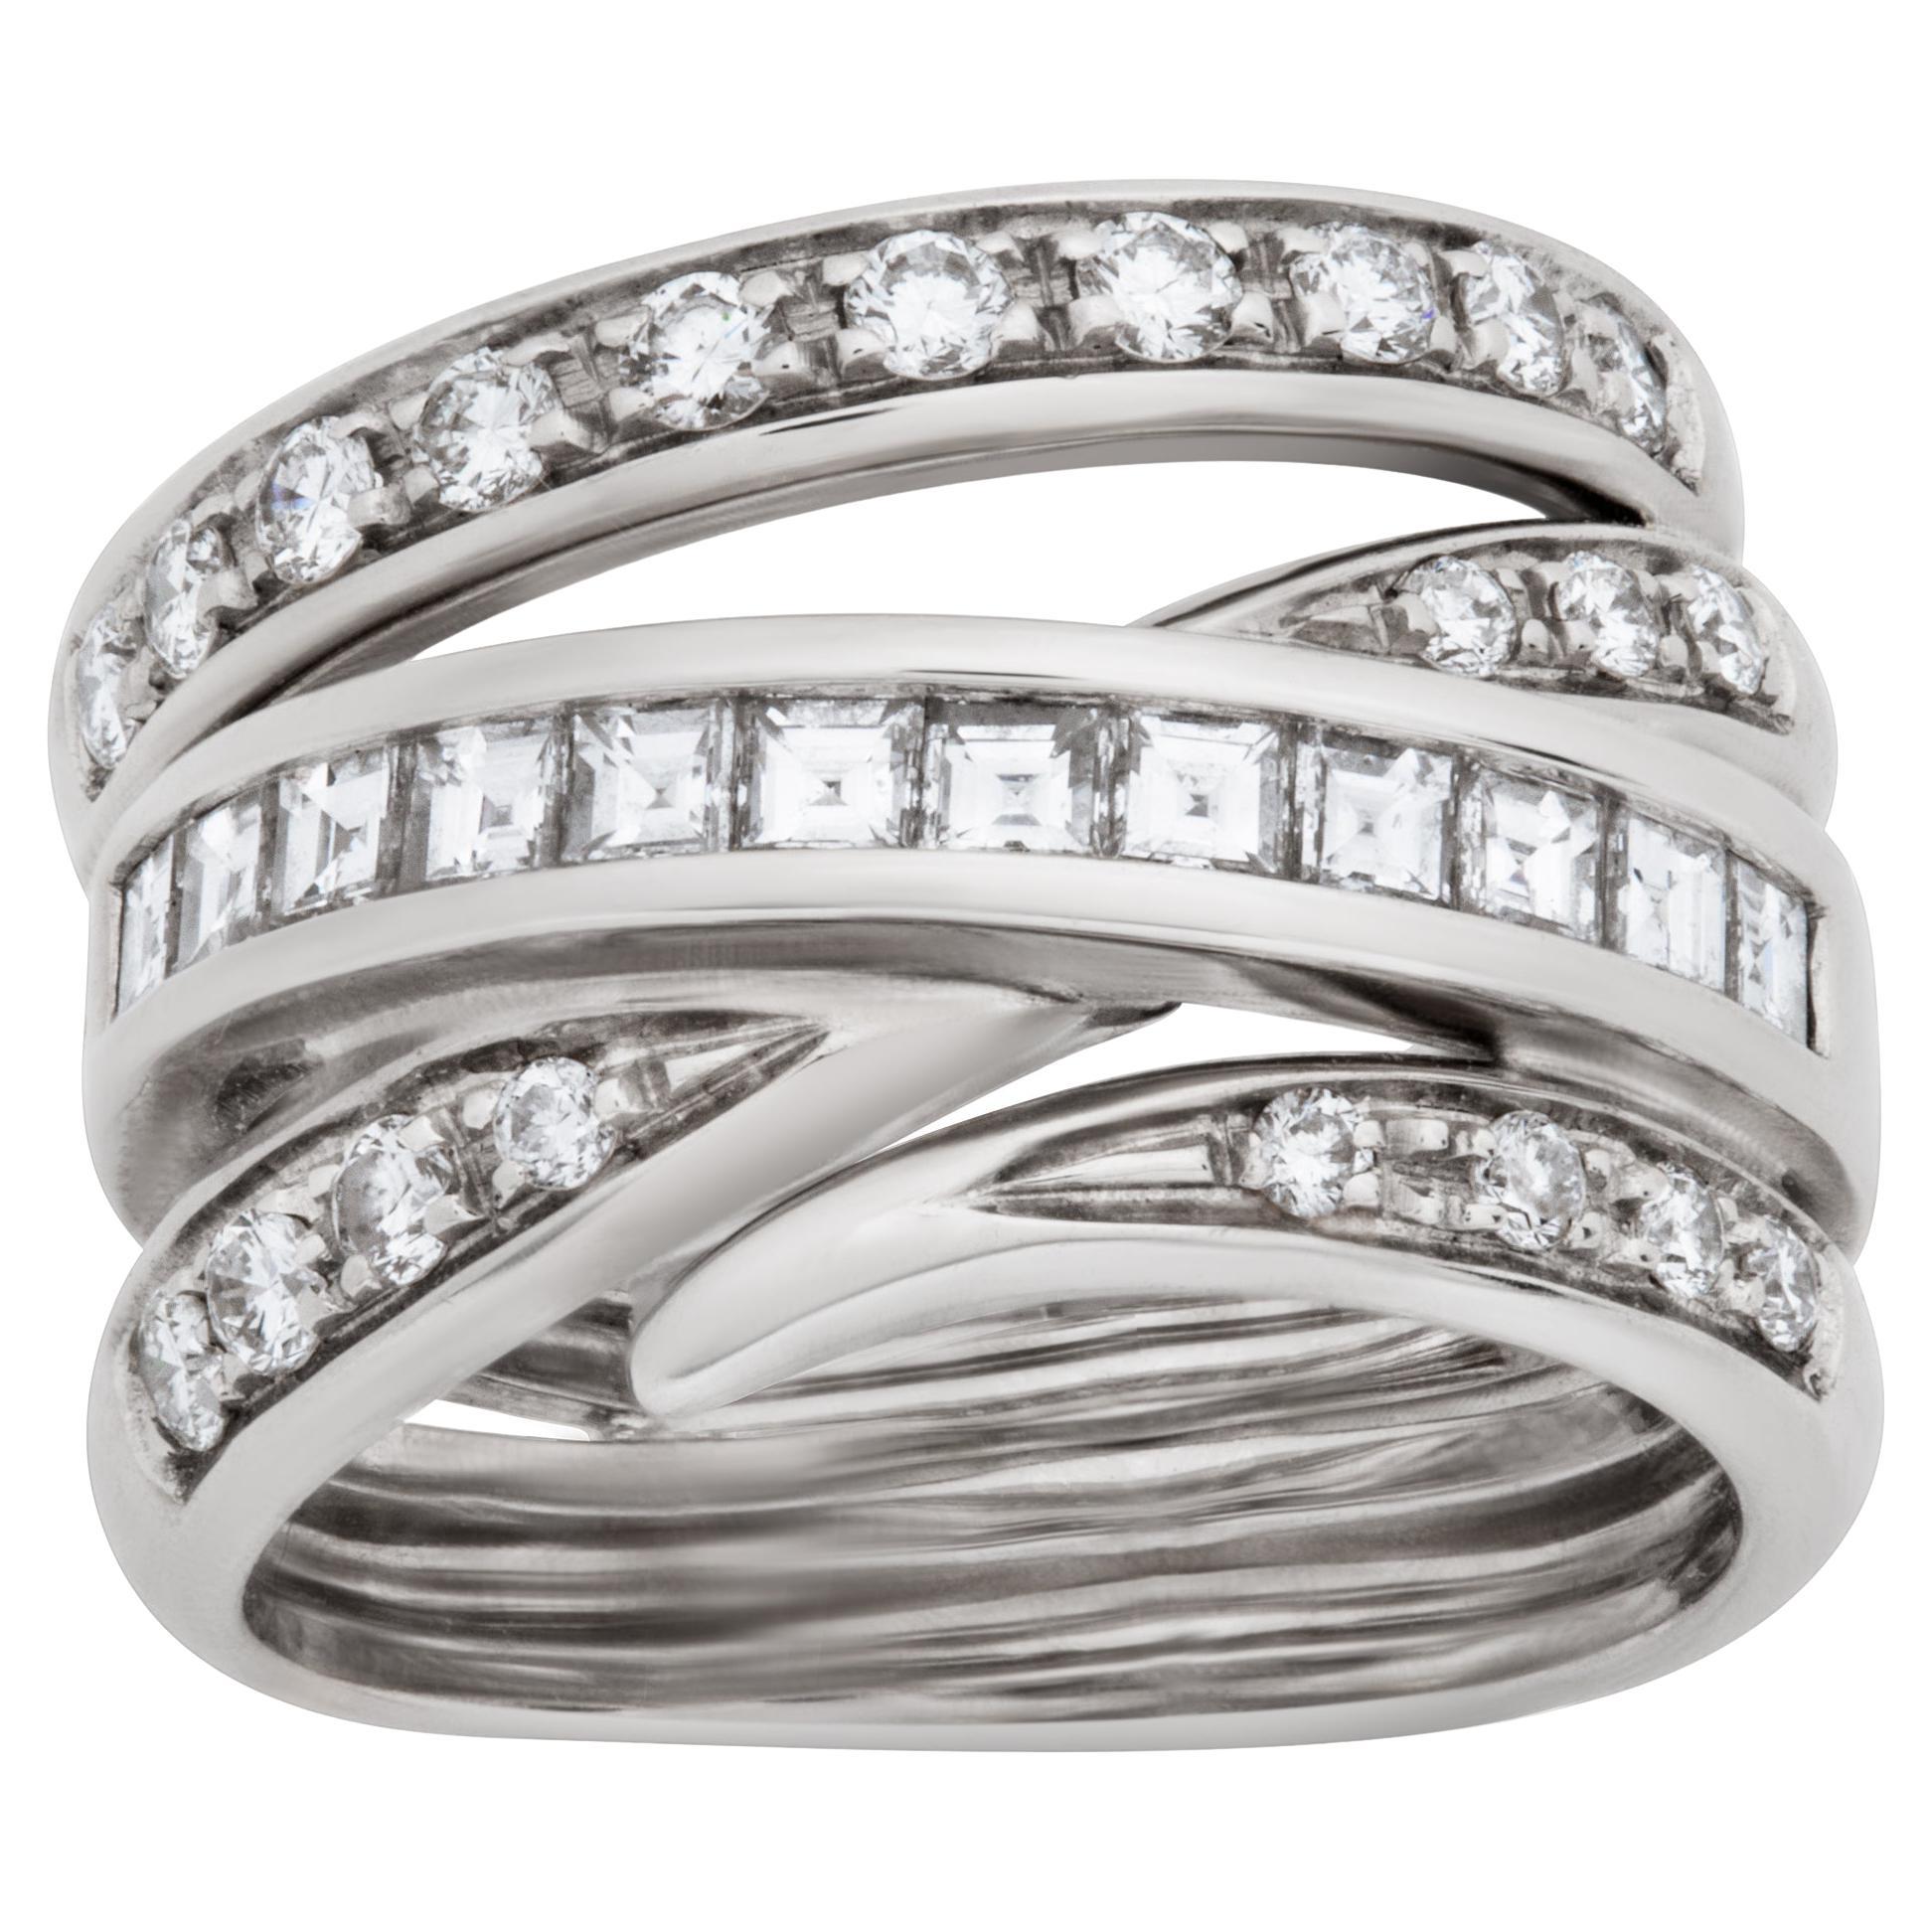 Crossover Diamond Ring in 18k White Gold. 2.10 Carats in Diamonds